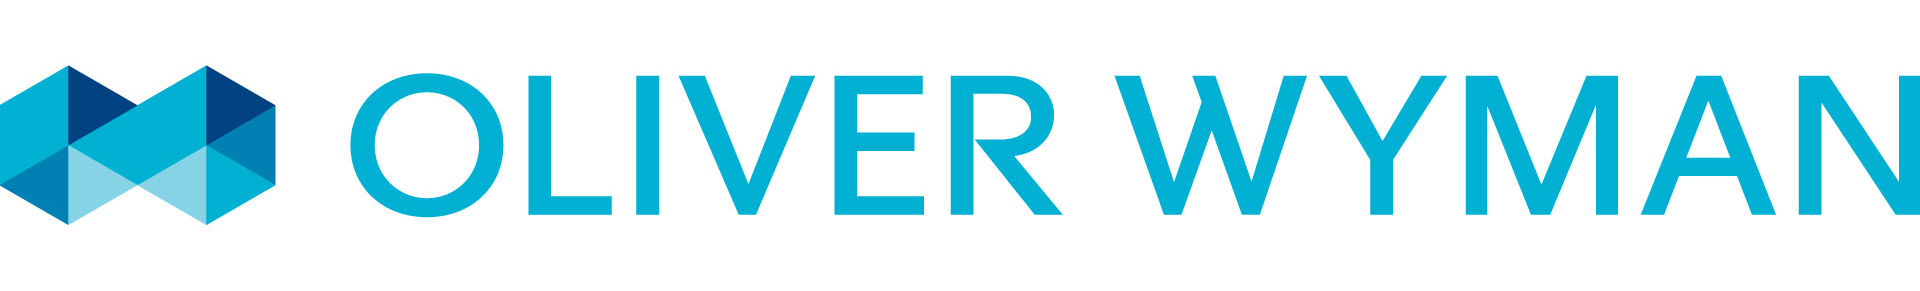 Oliver Wyman logo in colour